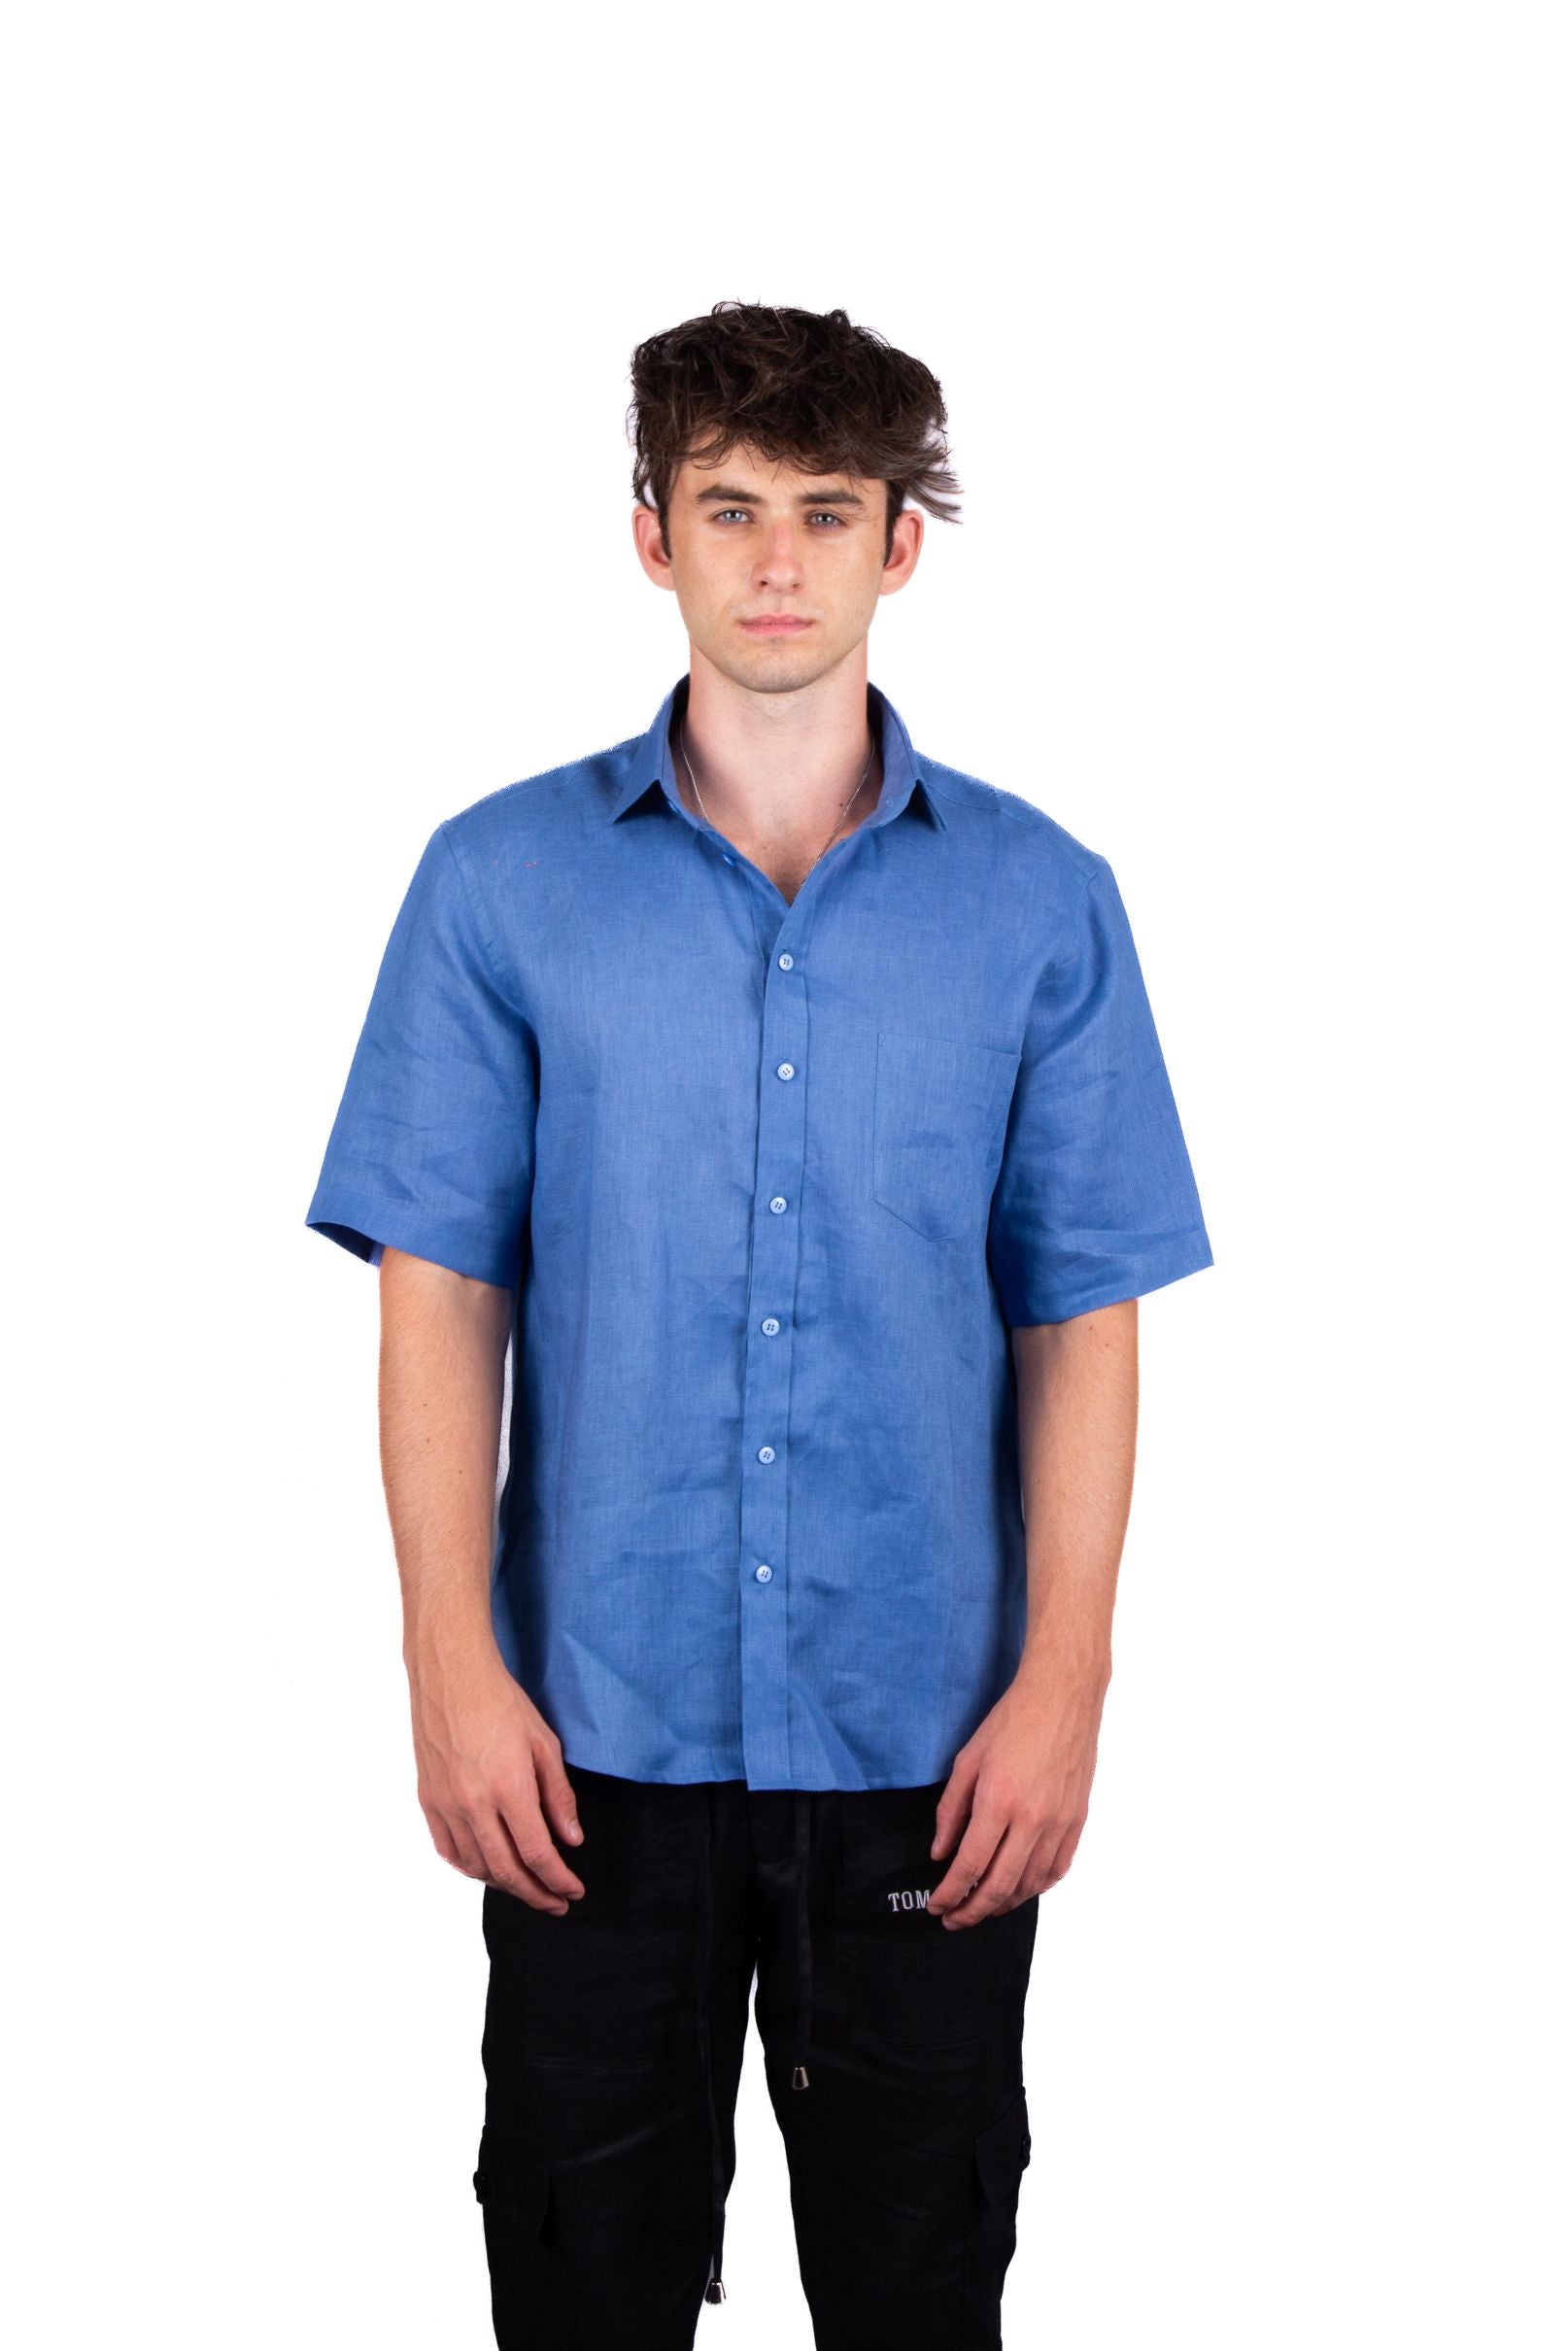 Athens Linen Shirt - Mens Shirt - Short Sleeve Shirt - Blue - Tom Voyager